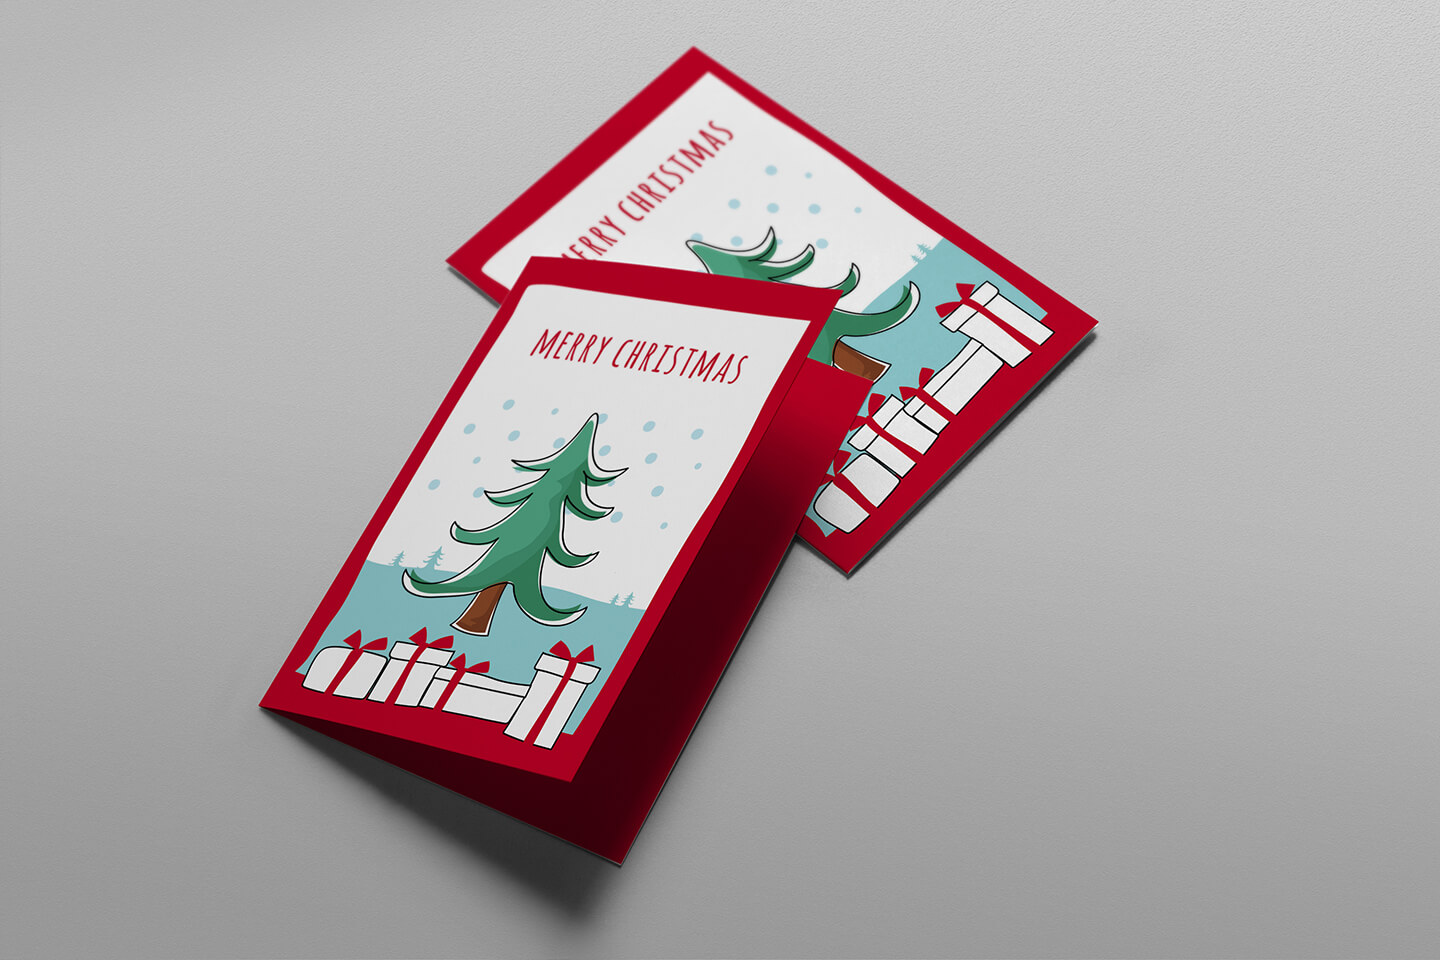 Free Templates | Christmas Card | Freebies & Deals For For Free Christmas Card Templates For Photoshop